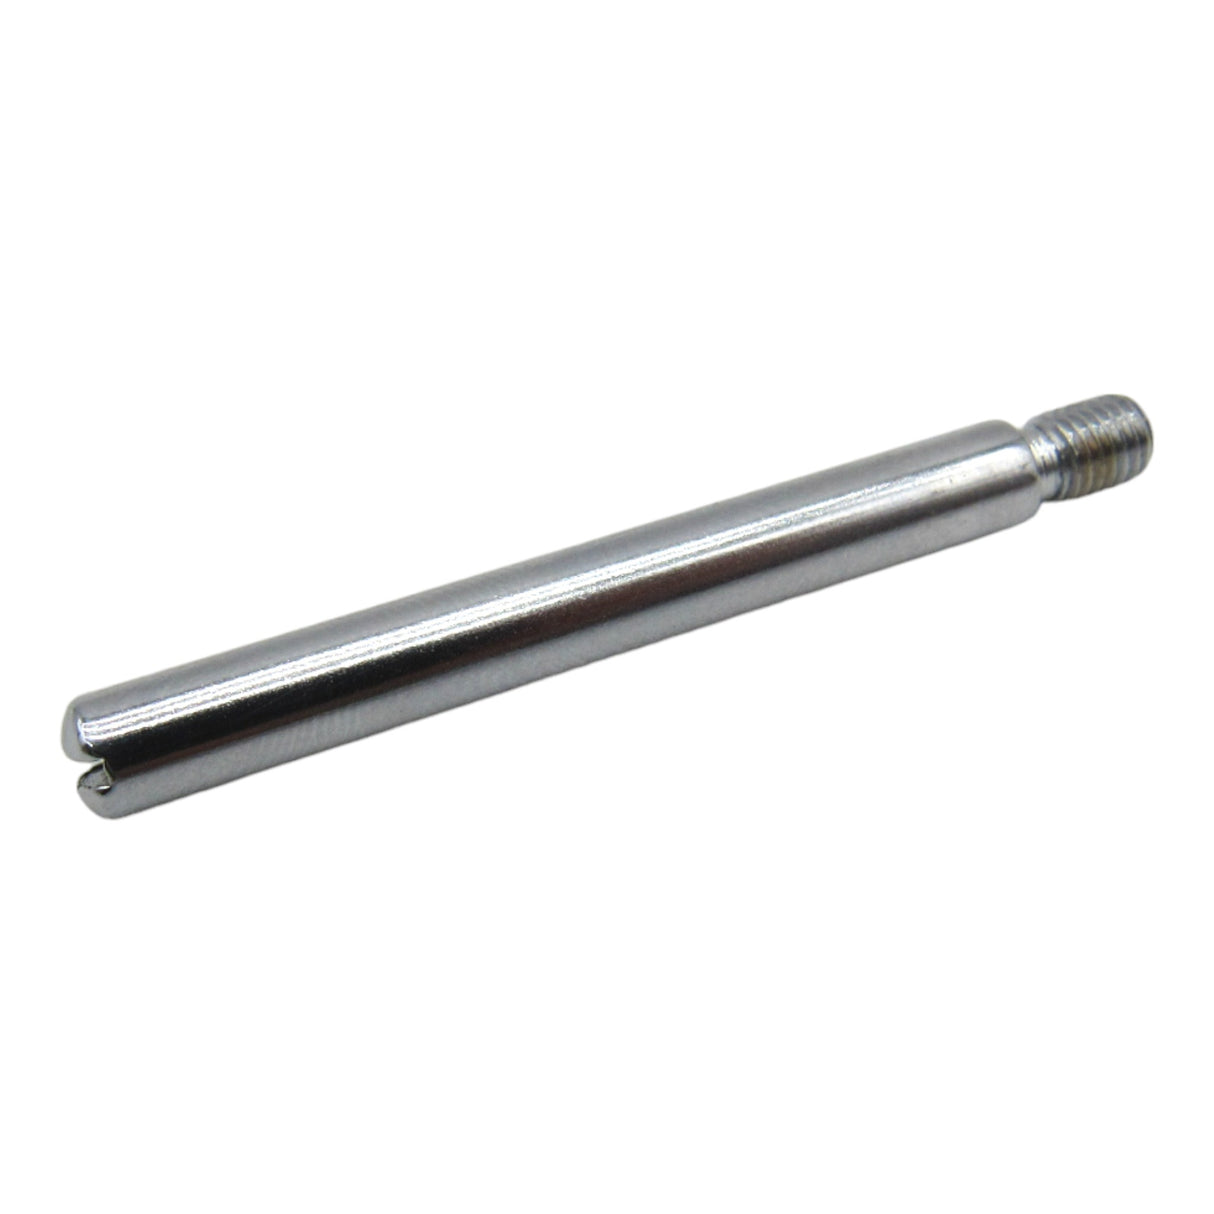 Spool Pin Screw In Type Fits Most Kenmore 148 & 158 Series Machines